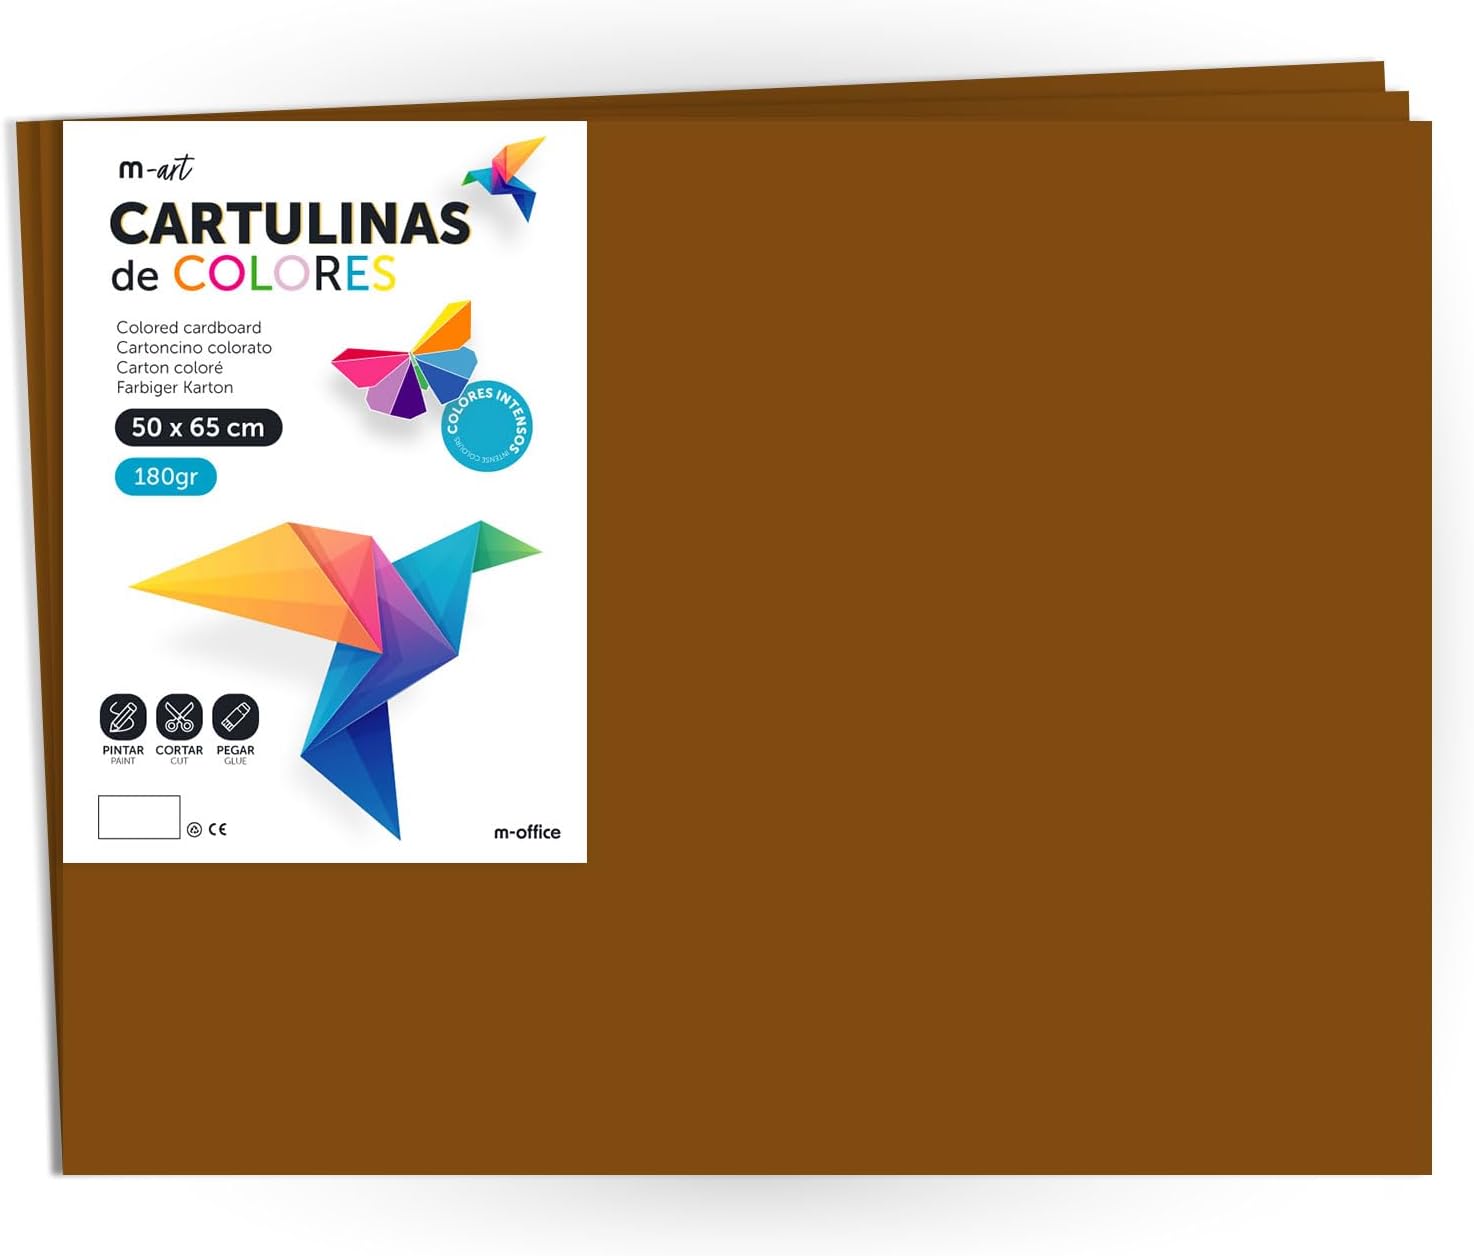 Cartulina de Colores, Cartulina Grande 50x65 cm de Colores Claros e  Intensos, Cartulinas de Colores 180g para Manualidadesr x25 hojas, marron)